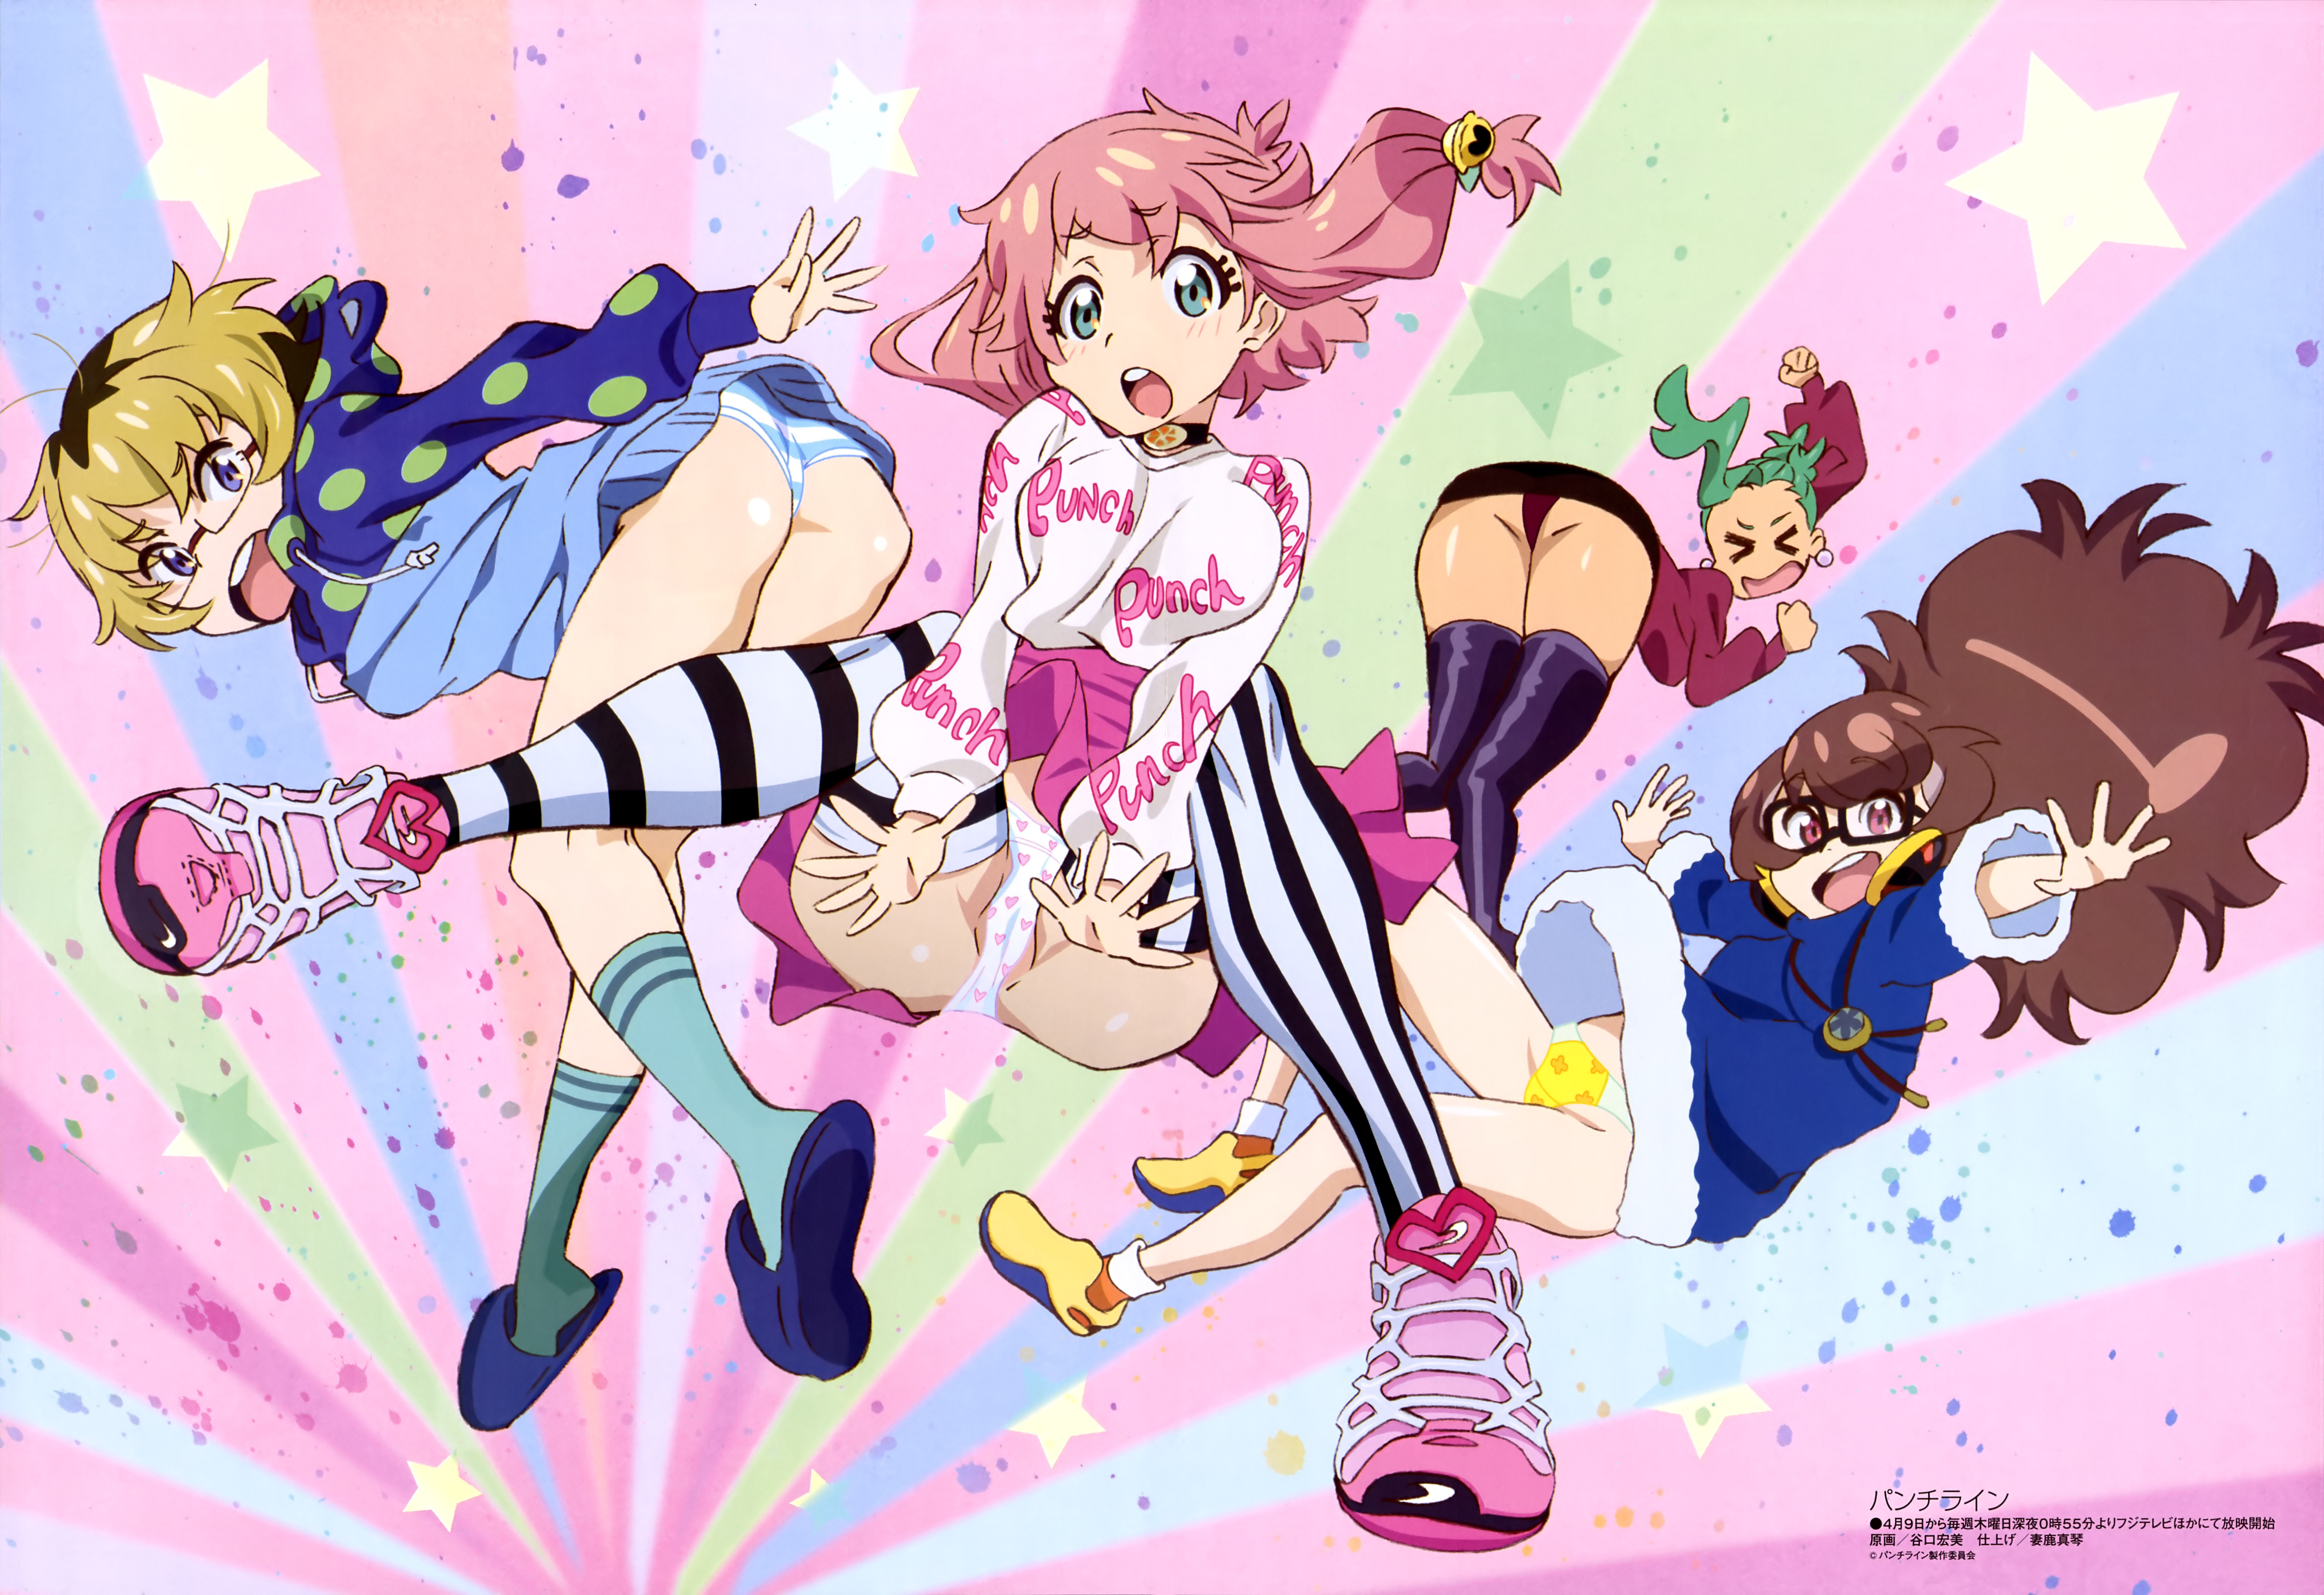 Megami MAGAZINE May 2015 anime posters punchline chichibu lovera daihatsu meika hikiotano ito narugino mikatan poster